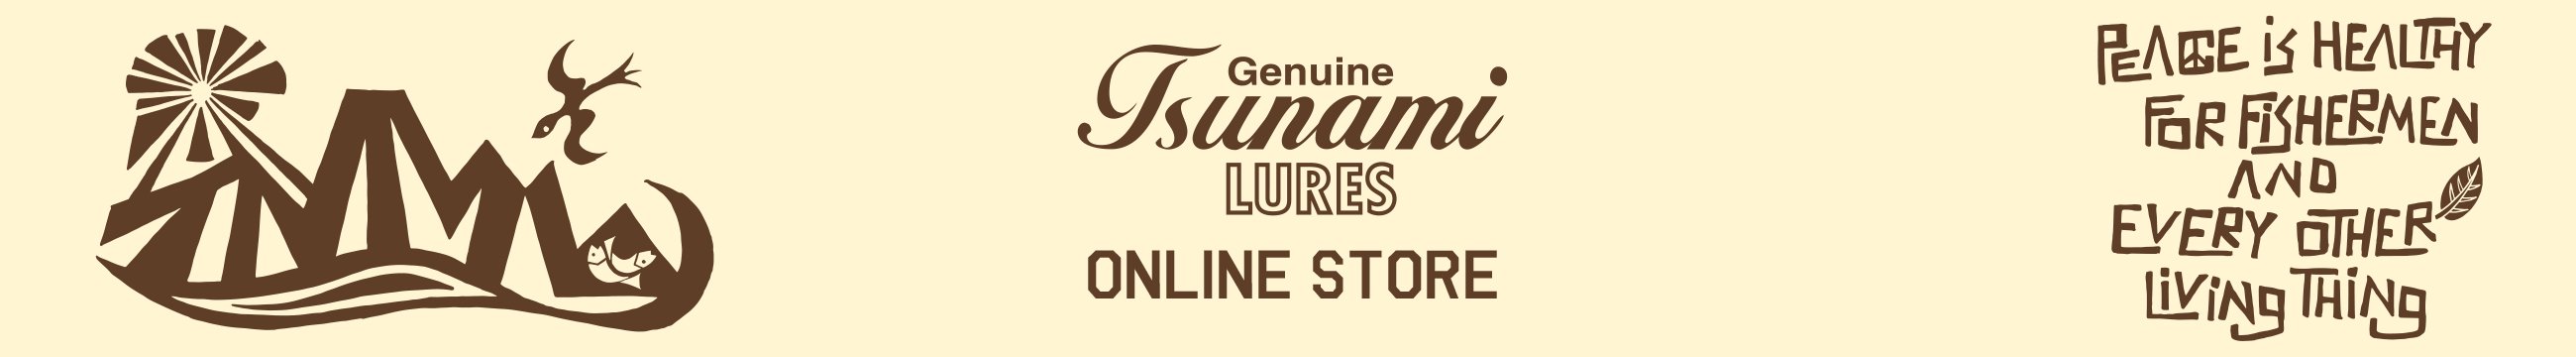 ROD - Tsunami Lures Online Store